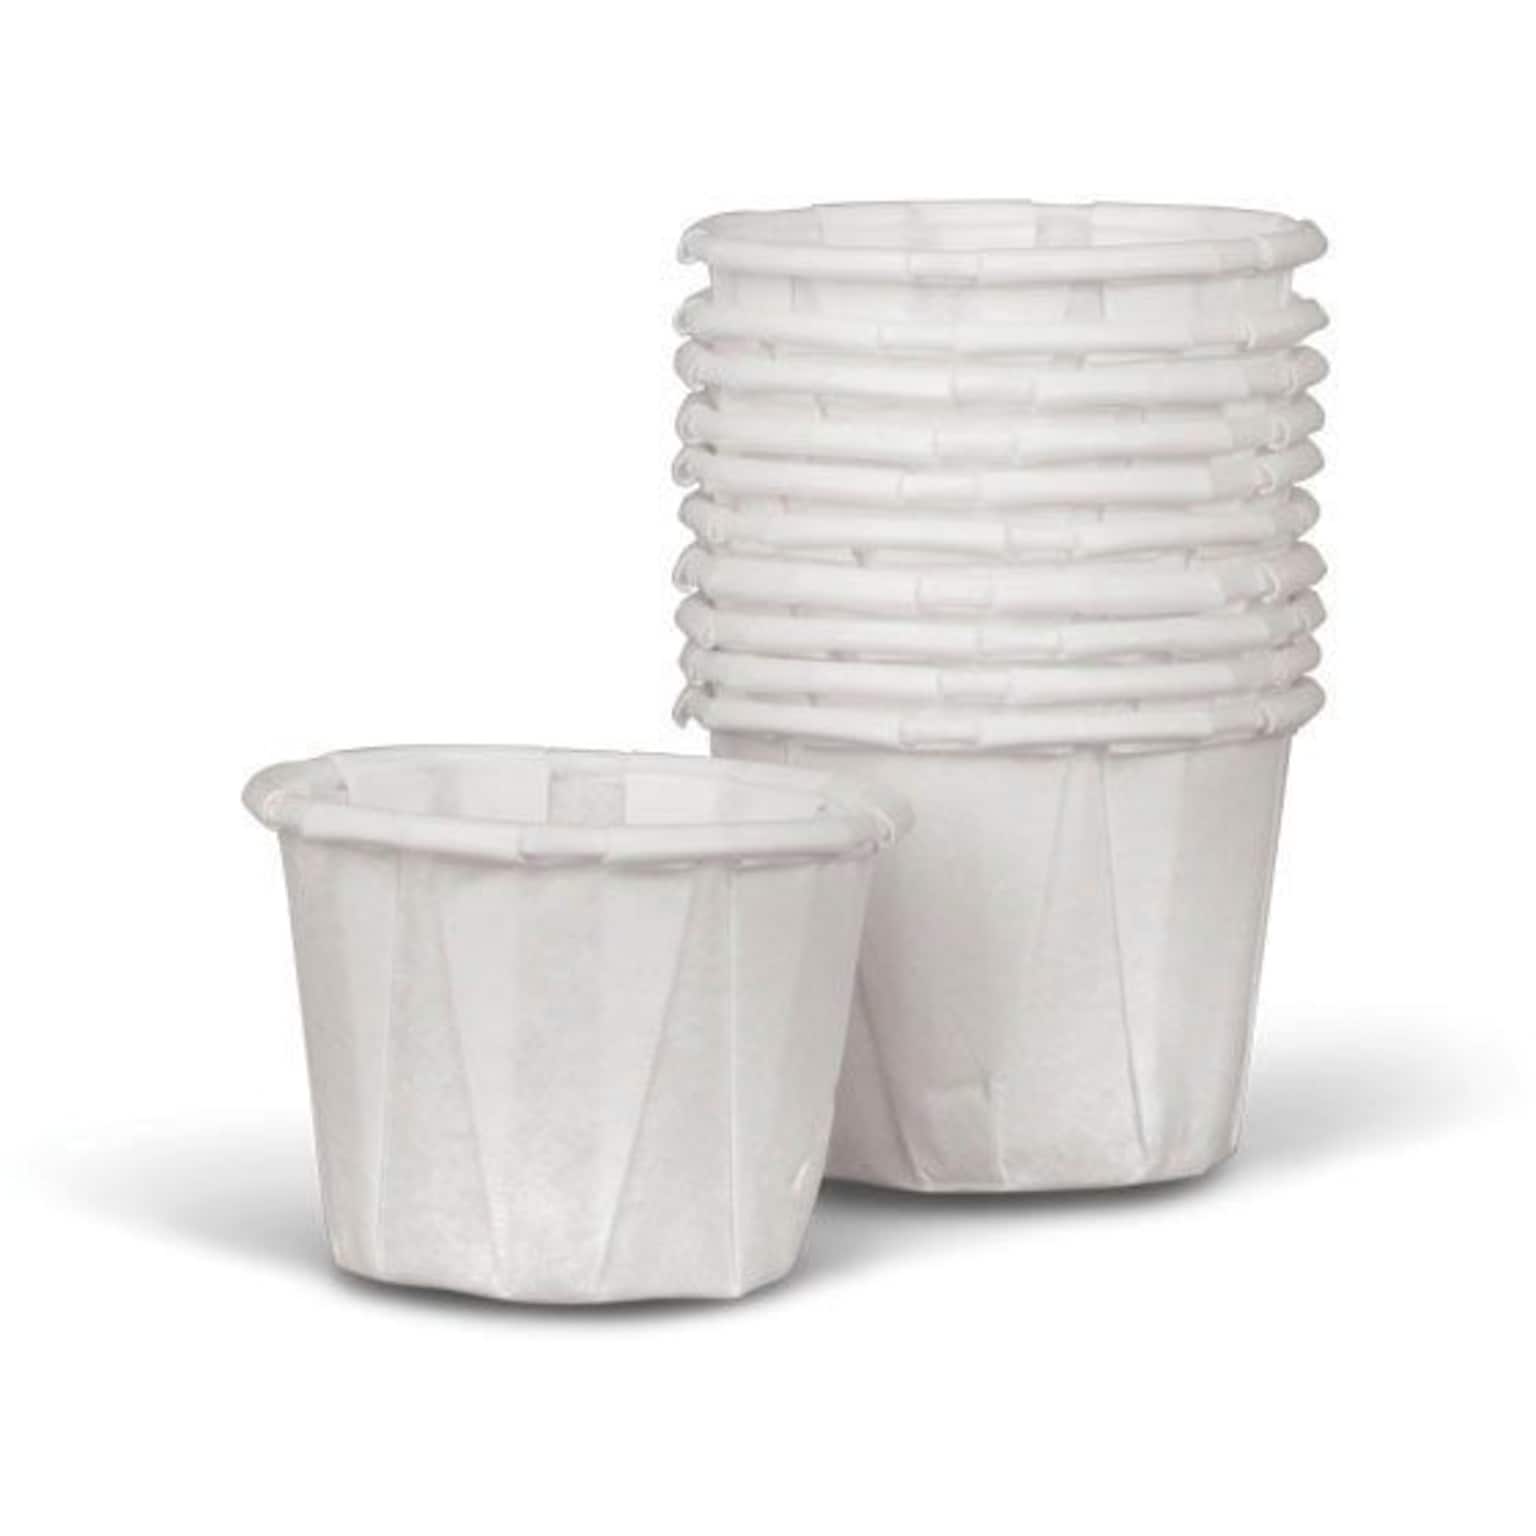 Medline Disposable Paper Souffle Cups, 1/2 oz, 250/Pack